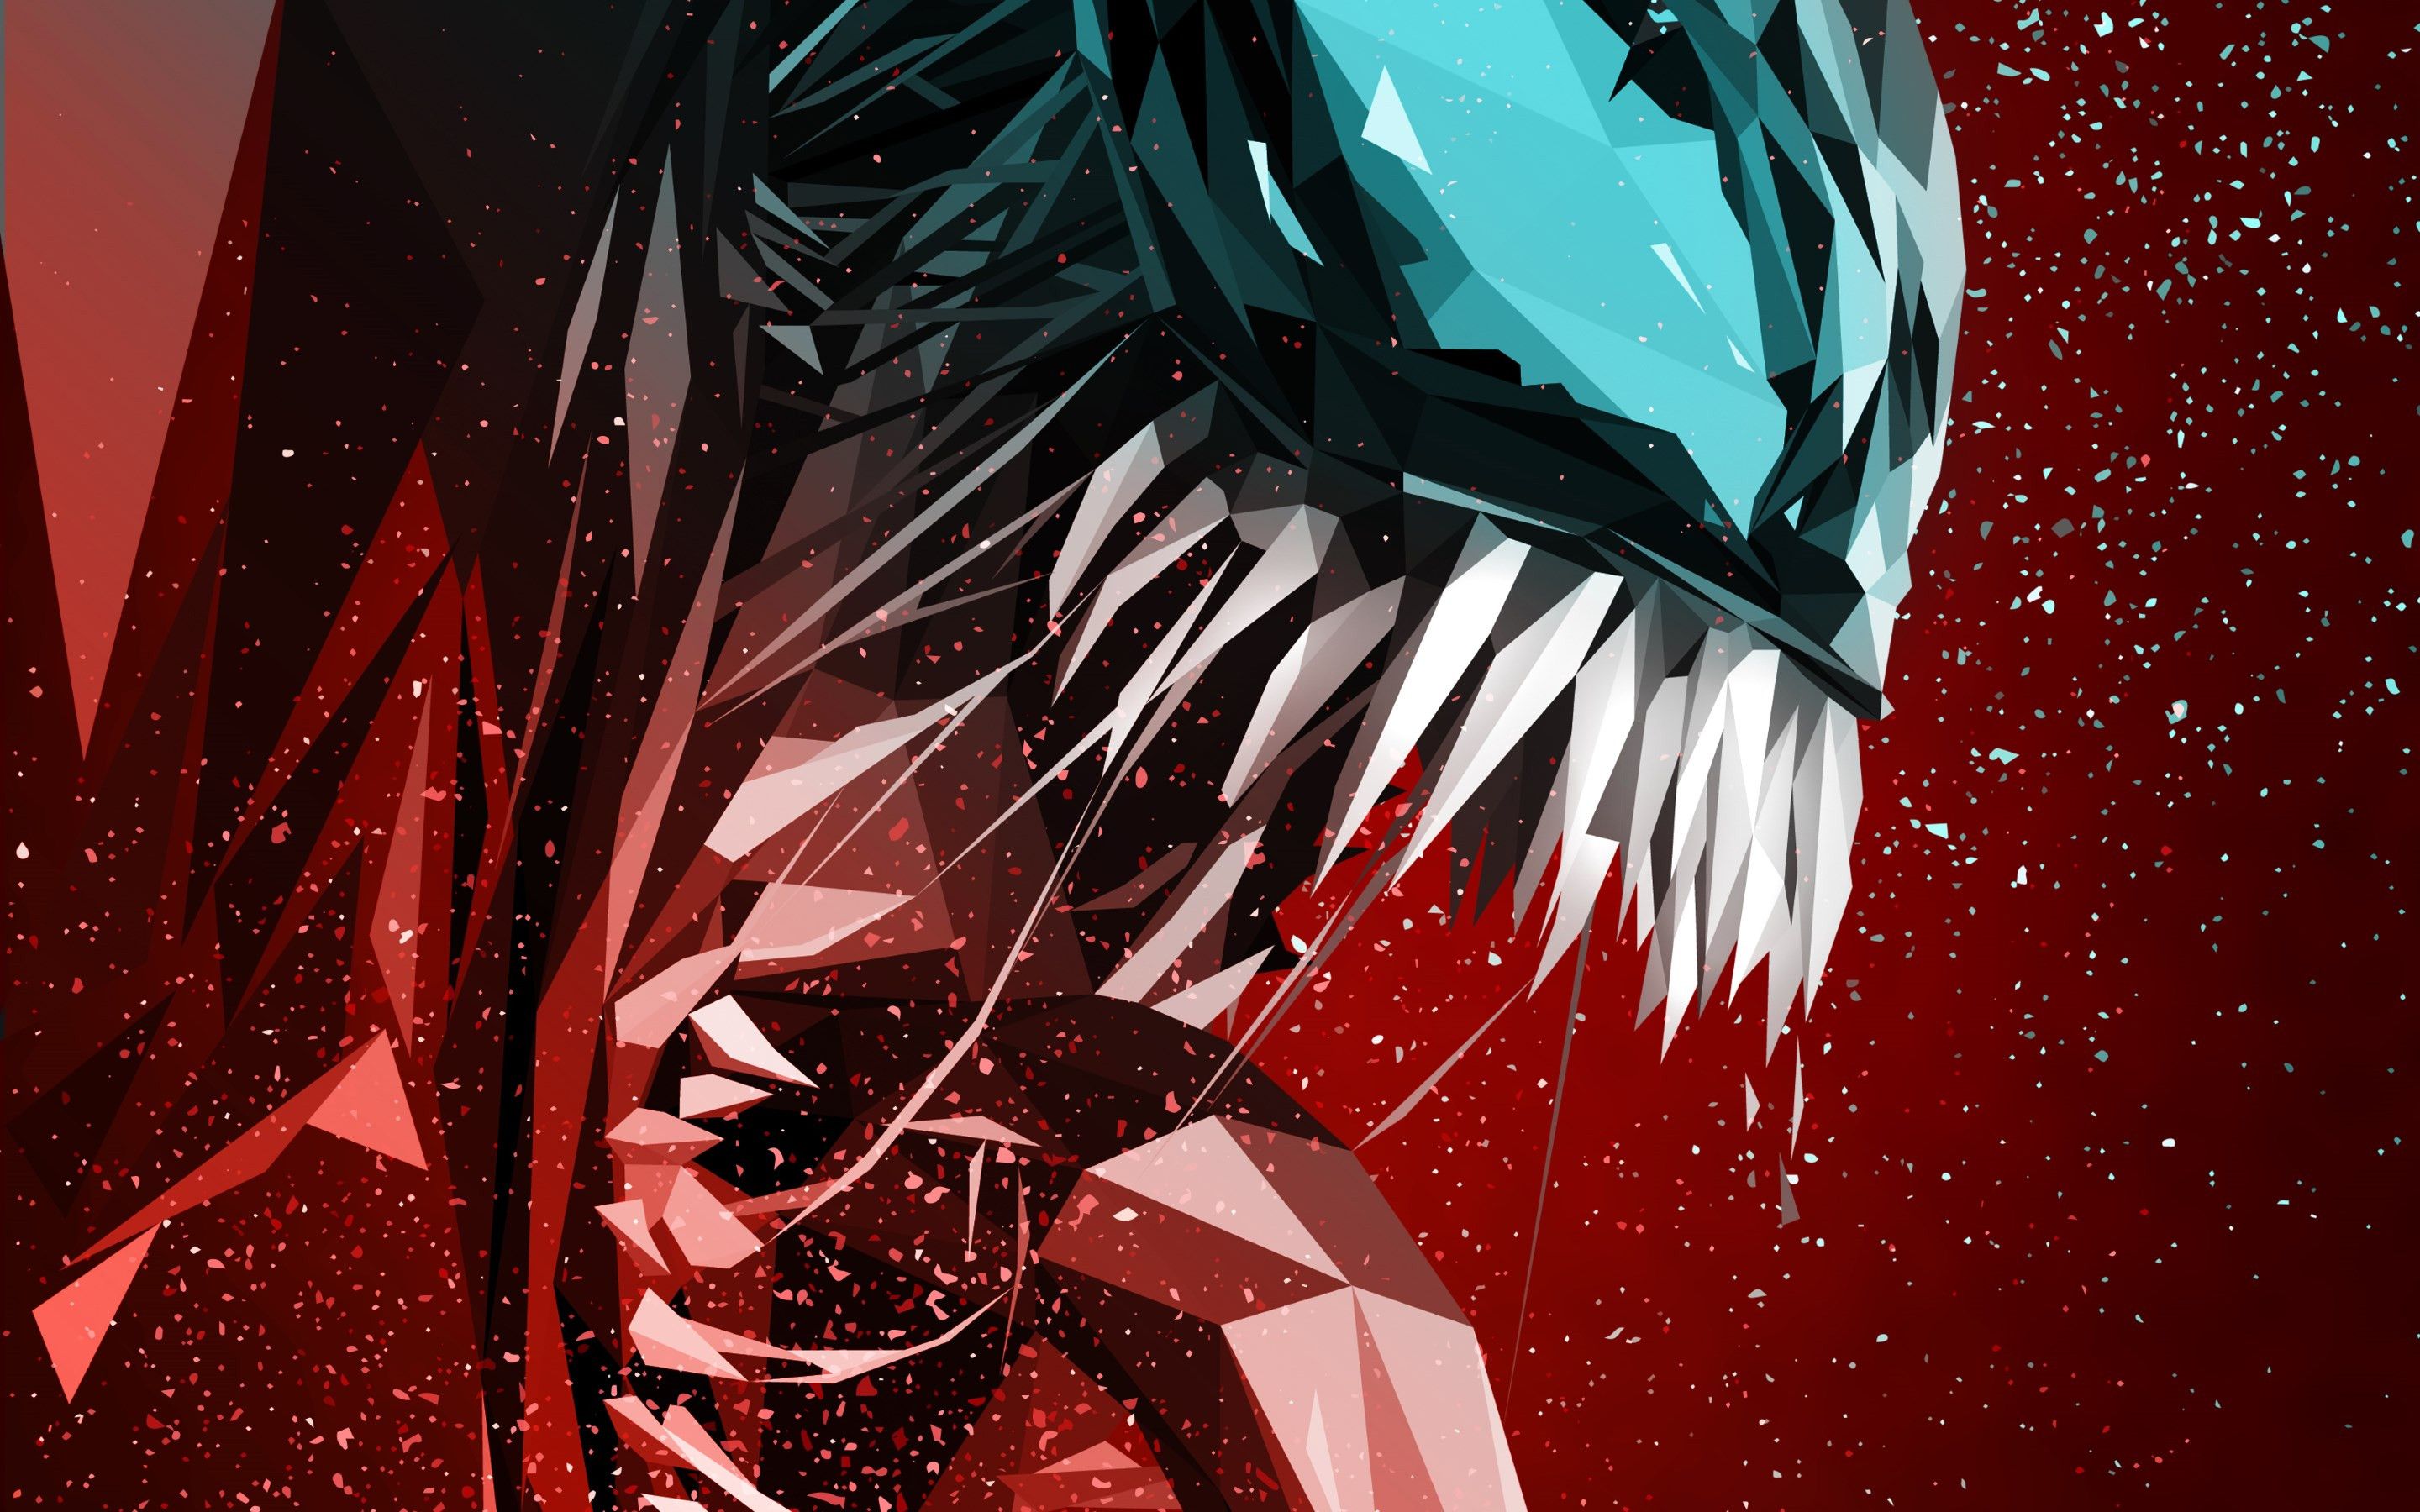 Download wallpaper: Venom digital art poster 2880x1800